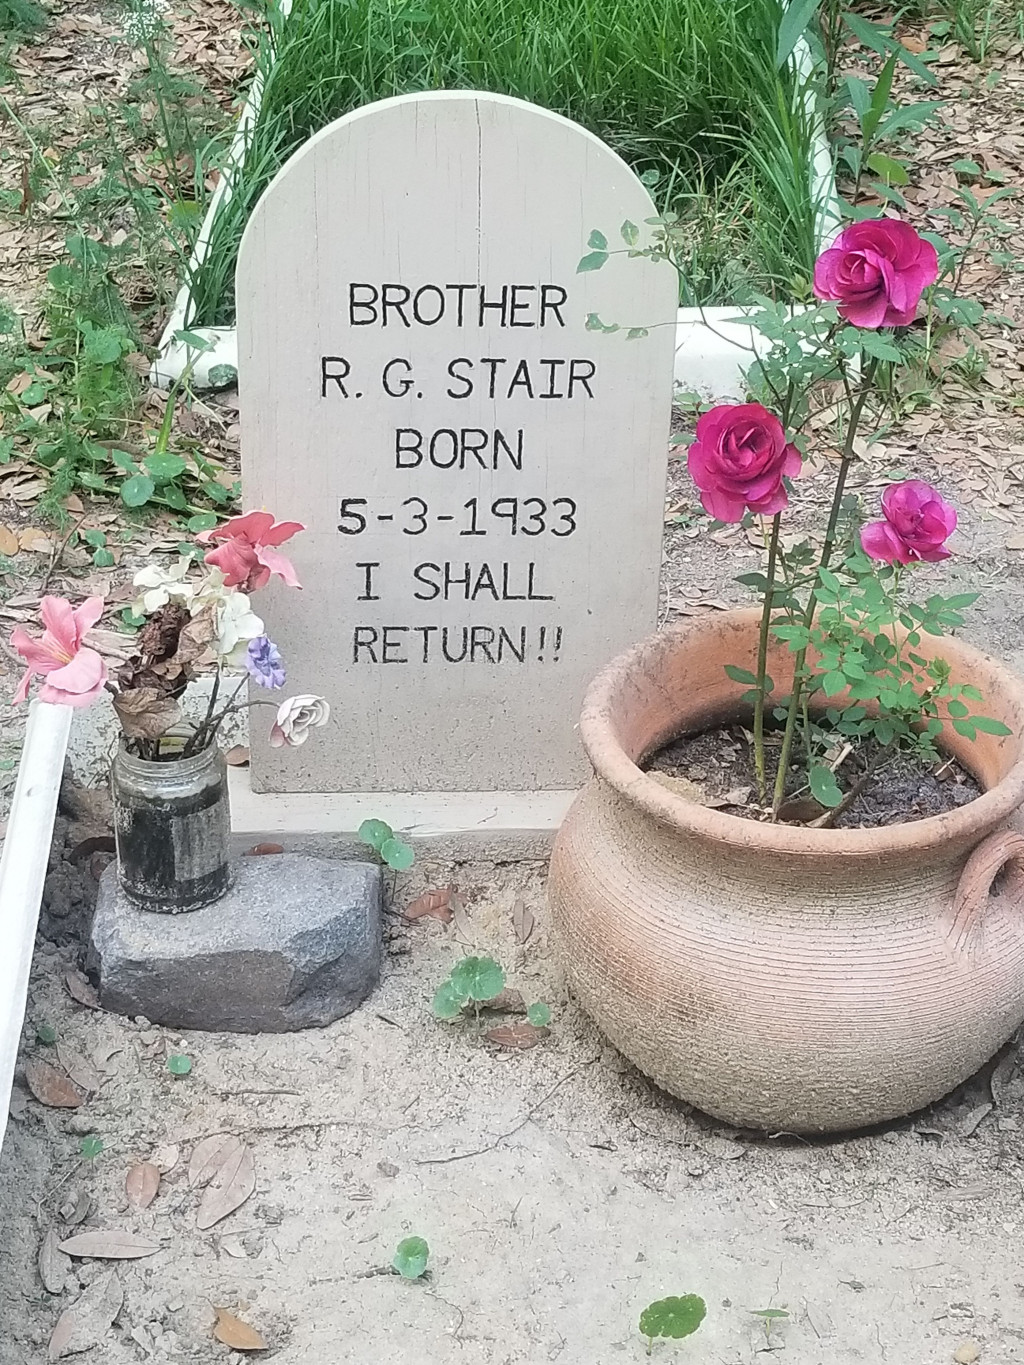 Bro Stair Grave death